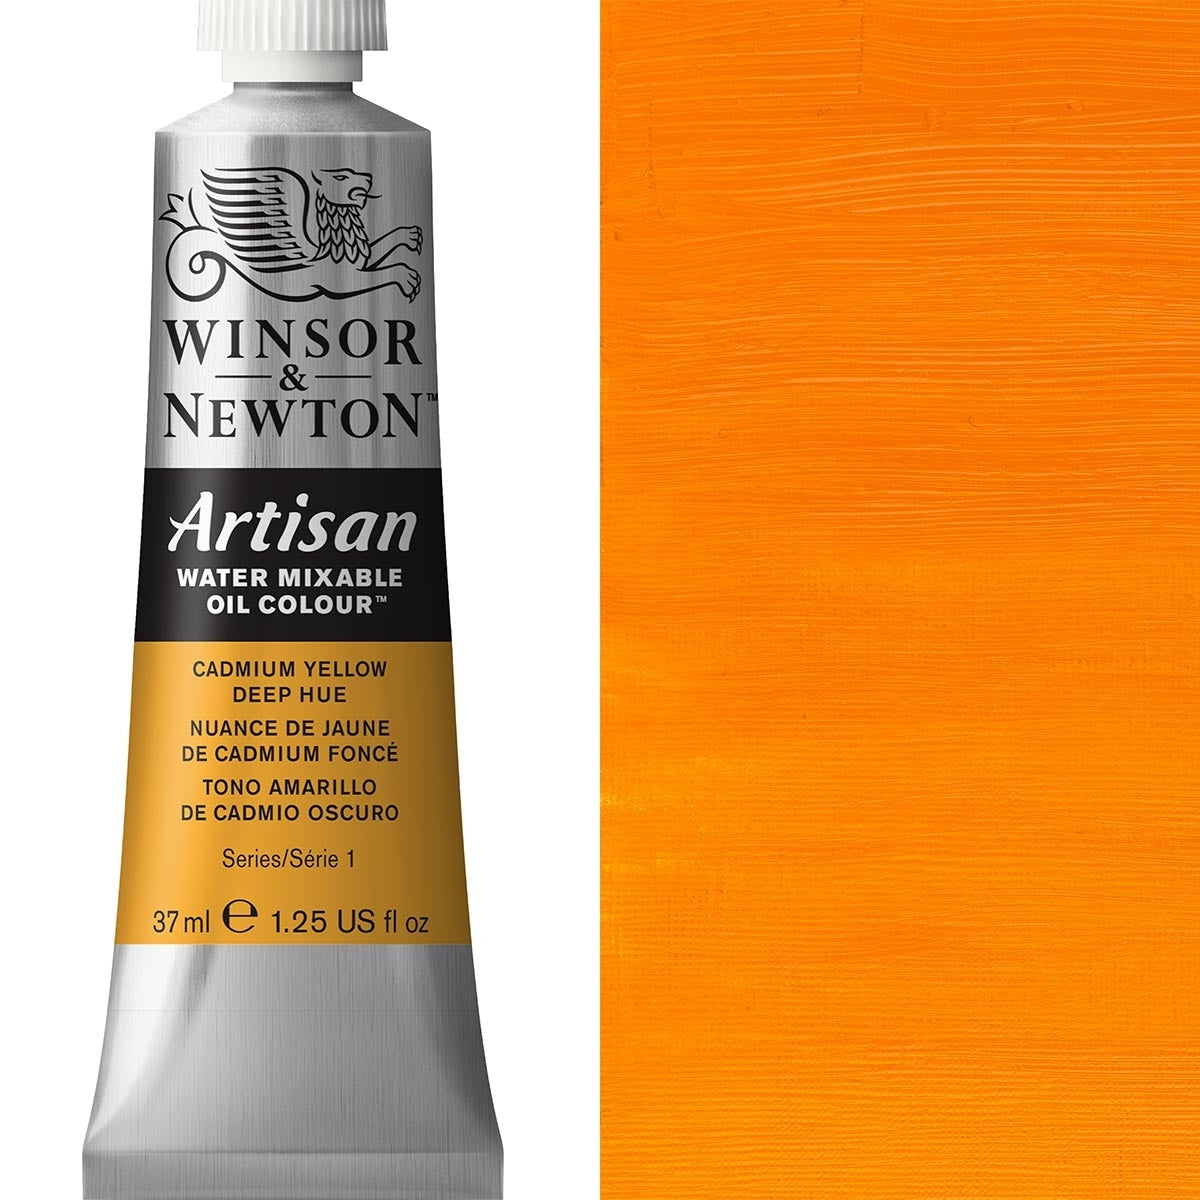 Winsor and Newton - Artisan Oil Colour Watermixable - 37ml - Cadmium Yellow Deep